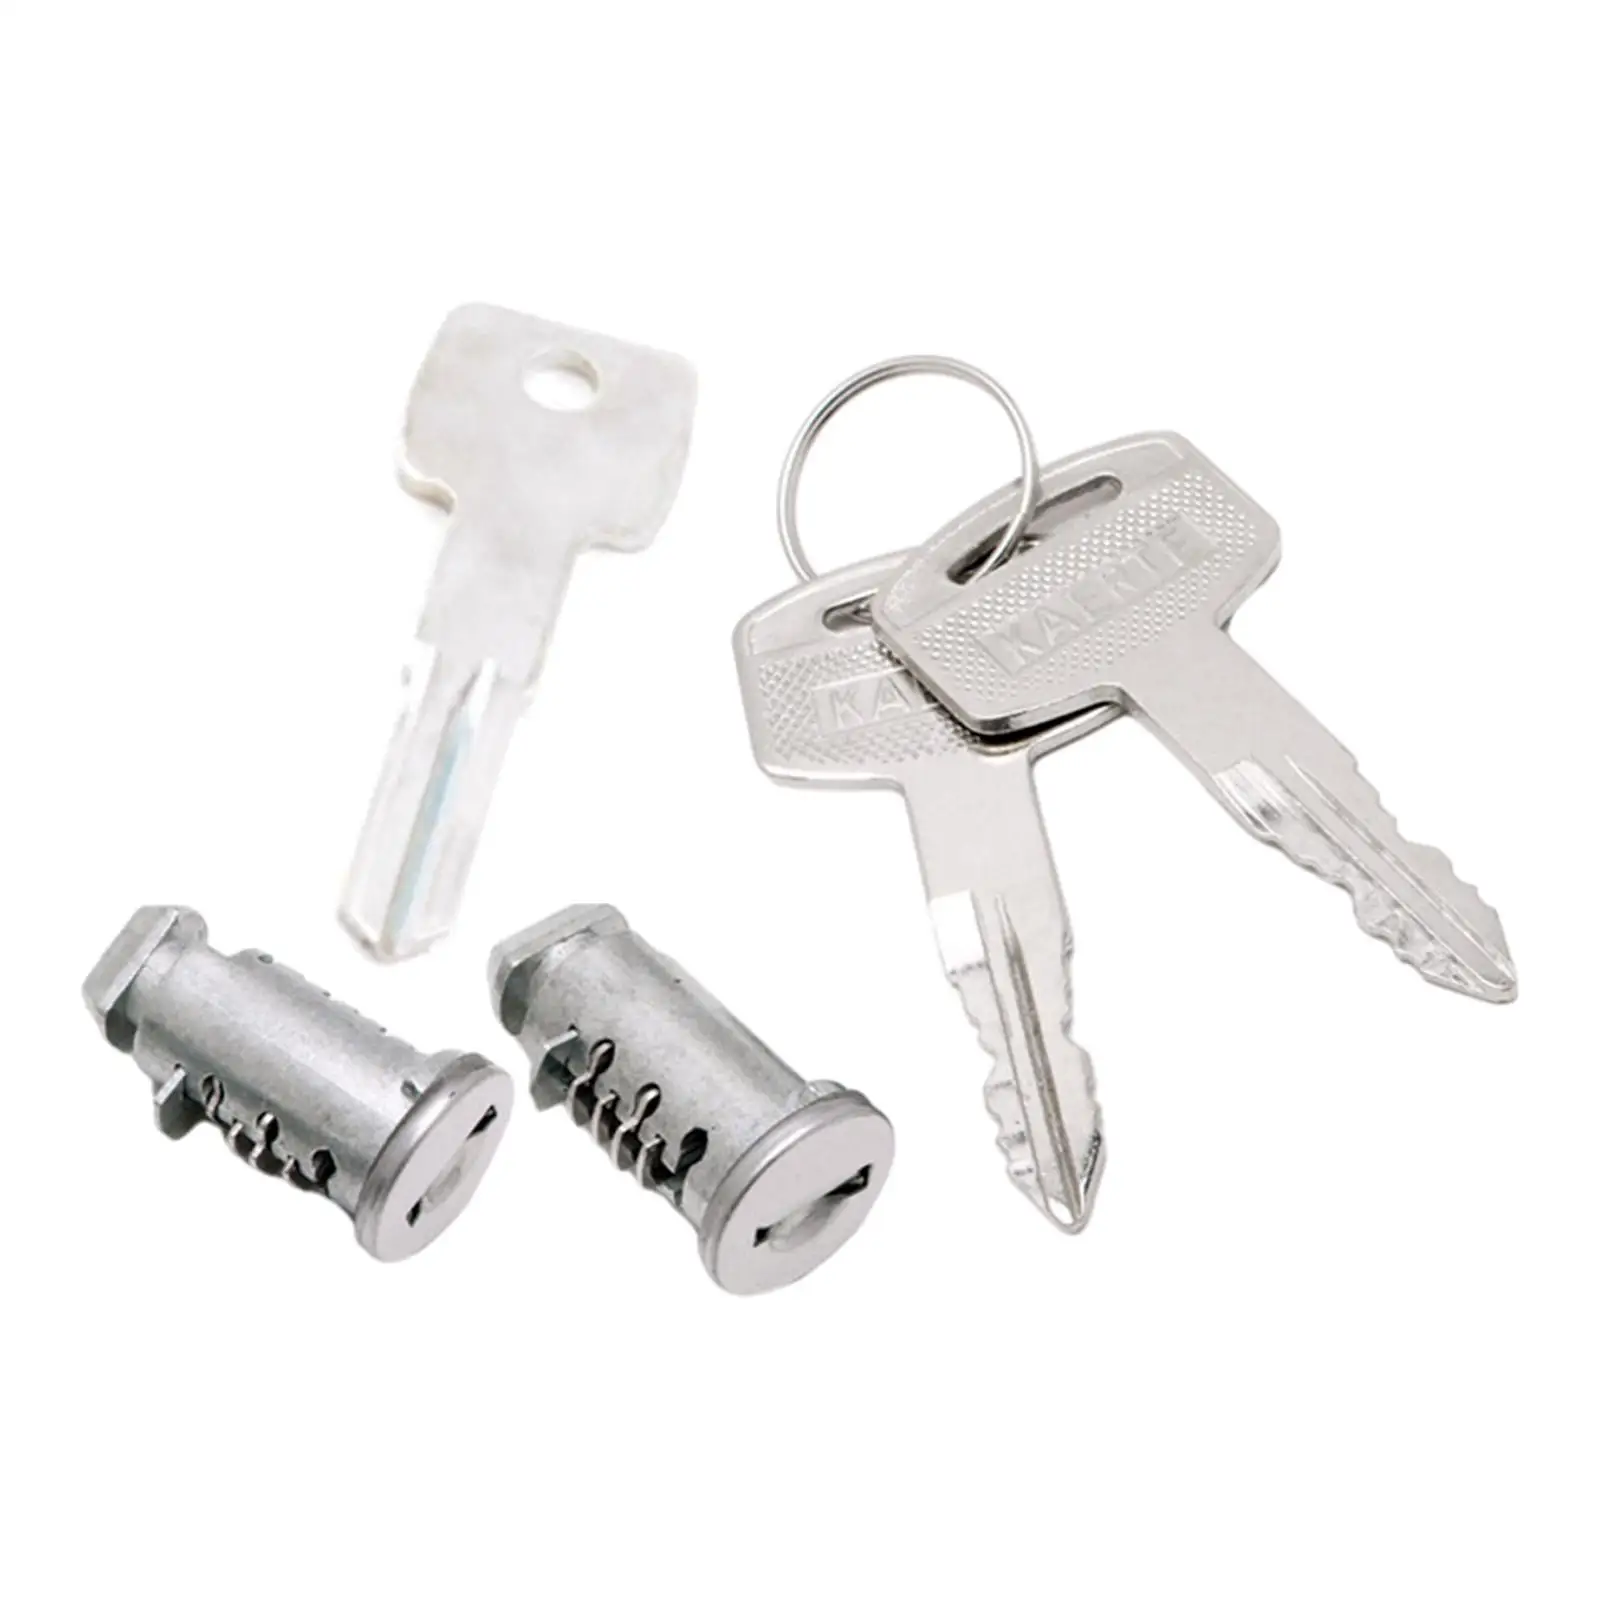 2 Pieces Lock Cylindes Lock Cores Detachable Cargo, Bar Lock with Key Cross Bars Locks and Key Kit for Car Rack Locks SUV